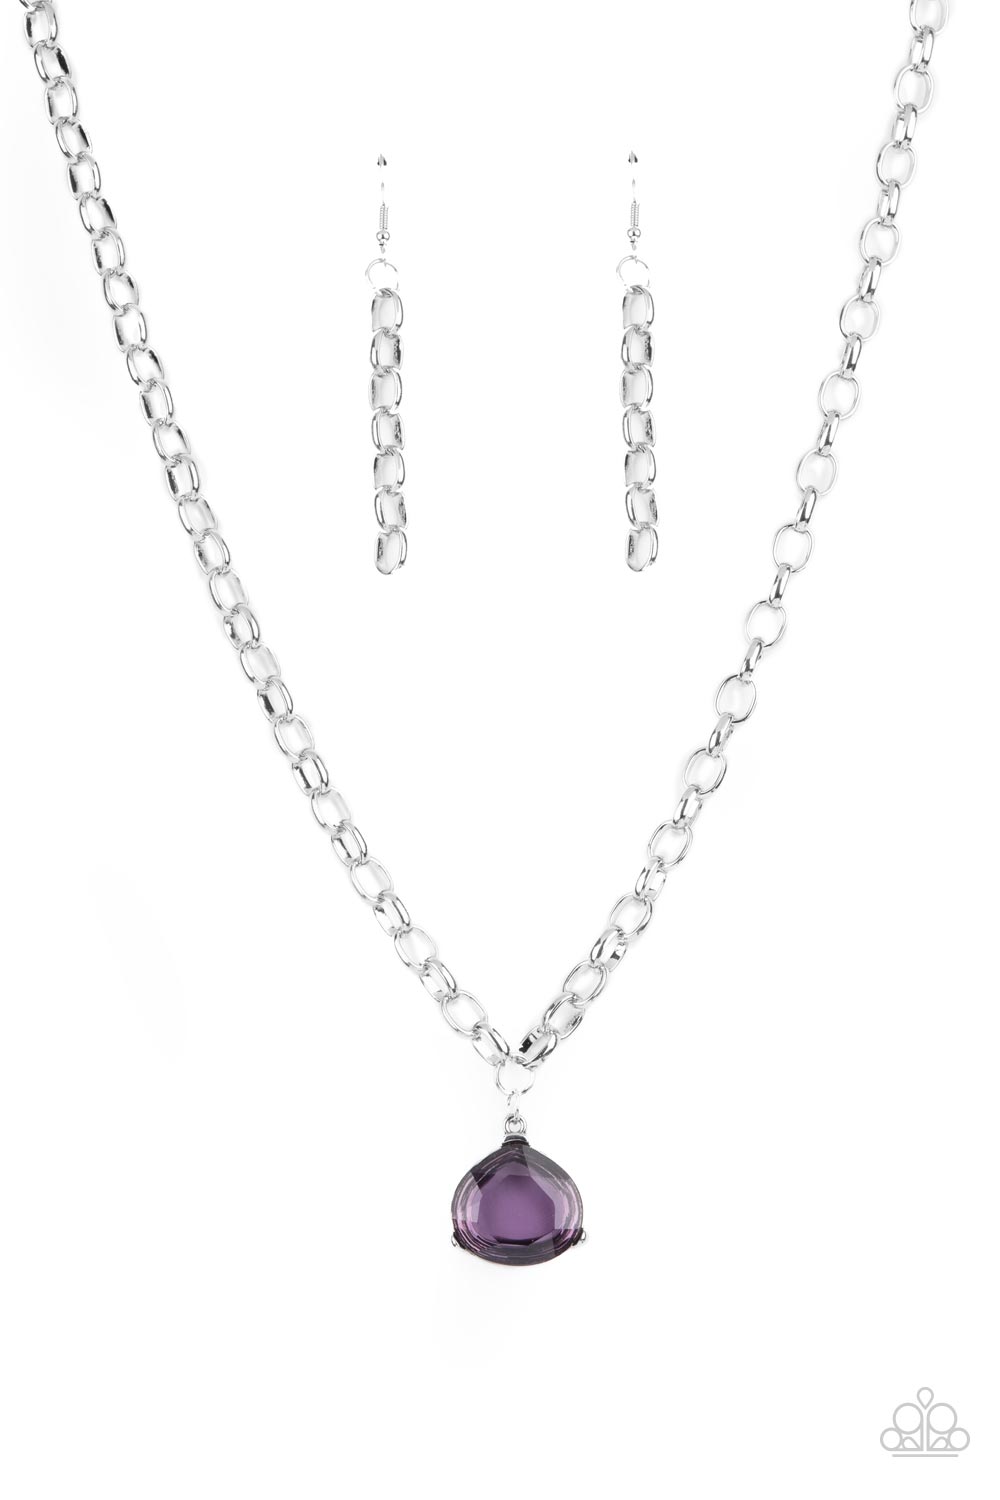 Gallery Gem Purple Rhinestone Necklace - Paparazzi Accessories- lightbox - CarasShop.com - $5 Jewelry by Cara Jewels